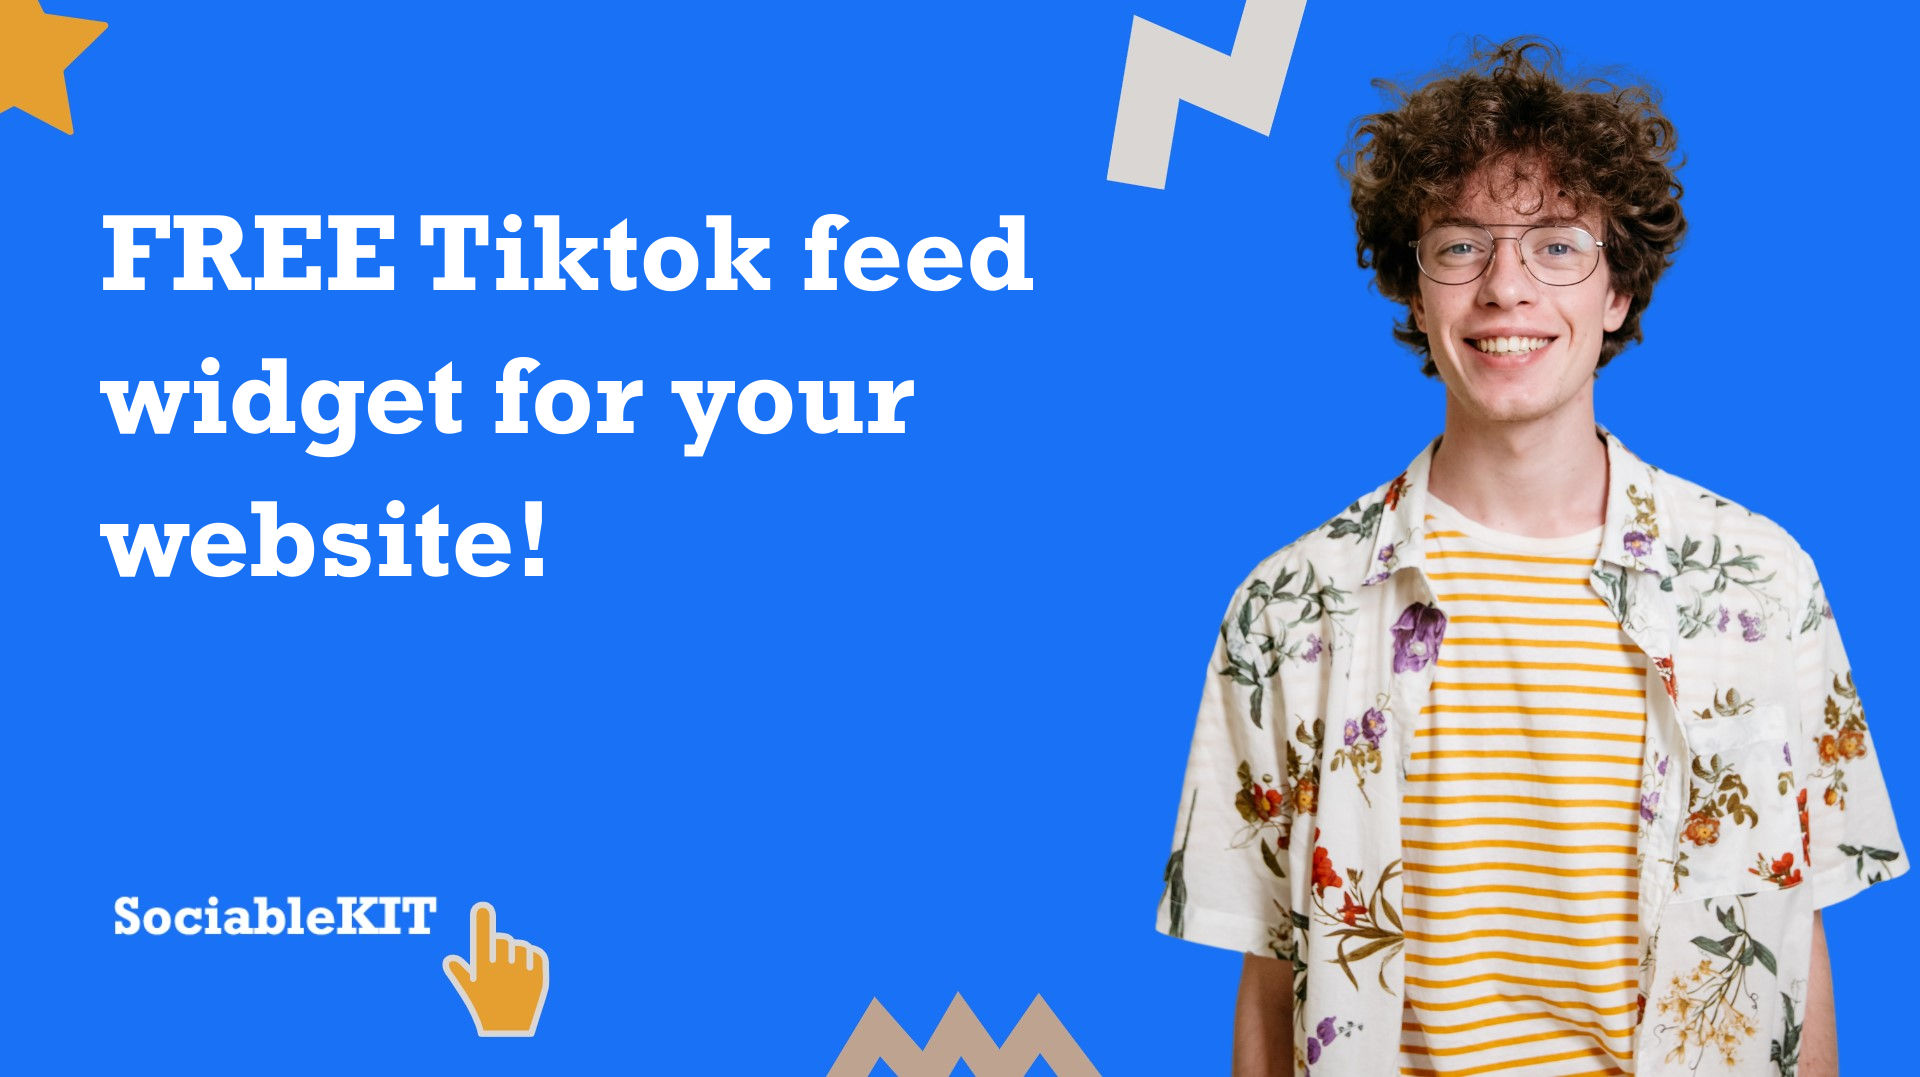 Free Tiktok feed widget for your website